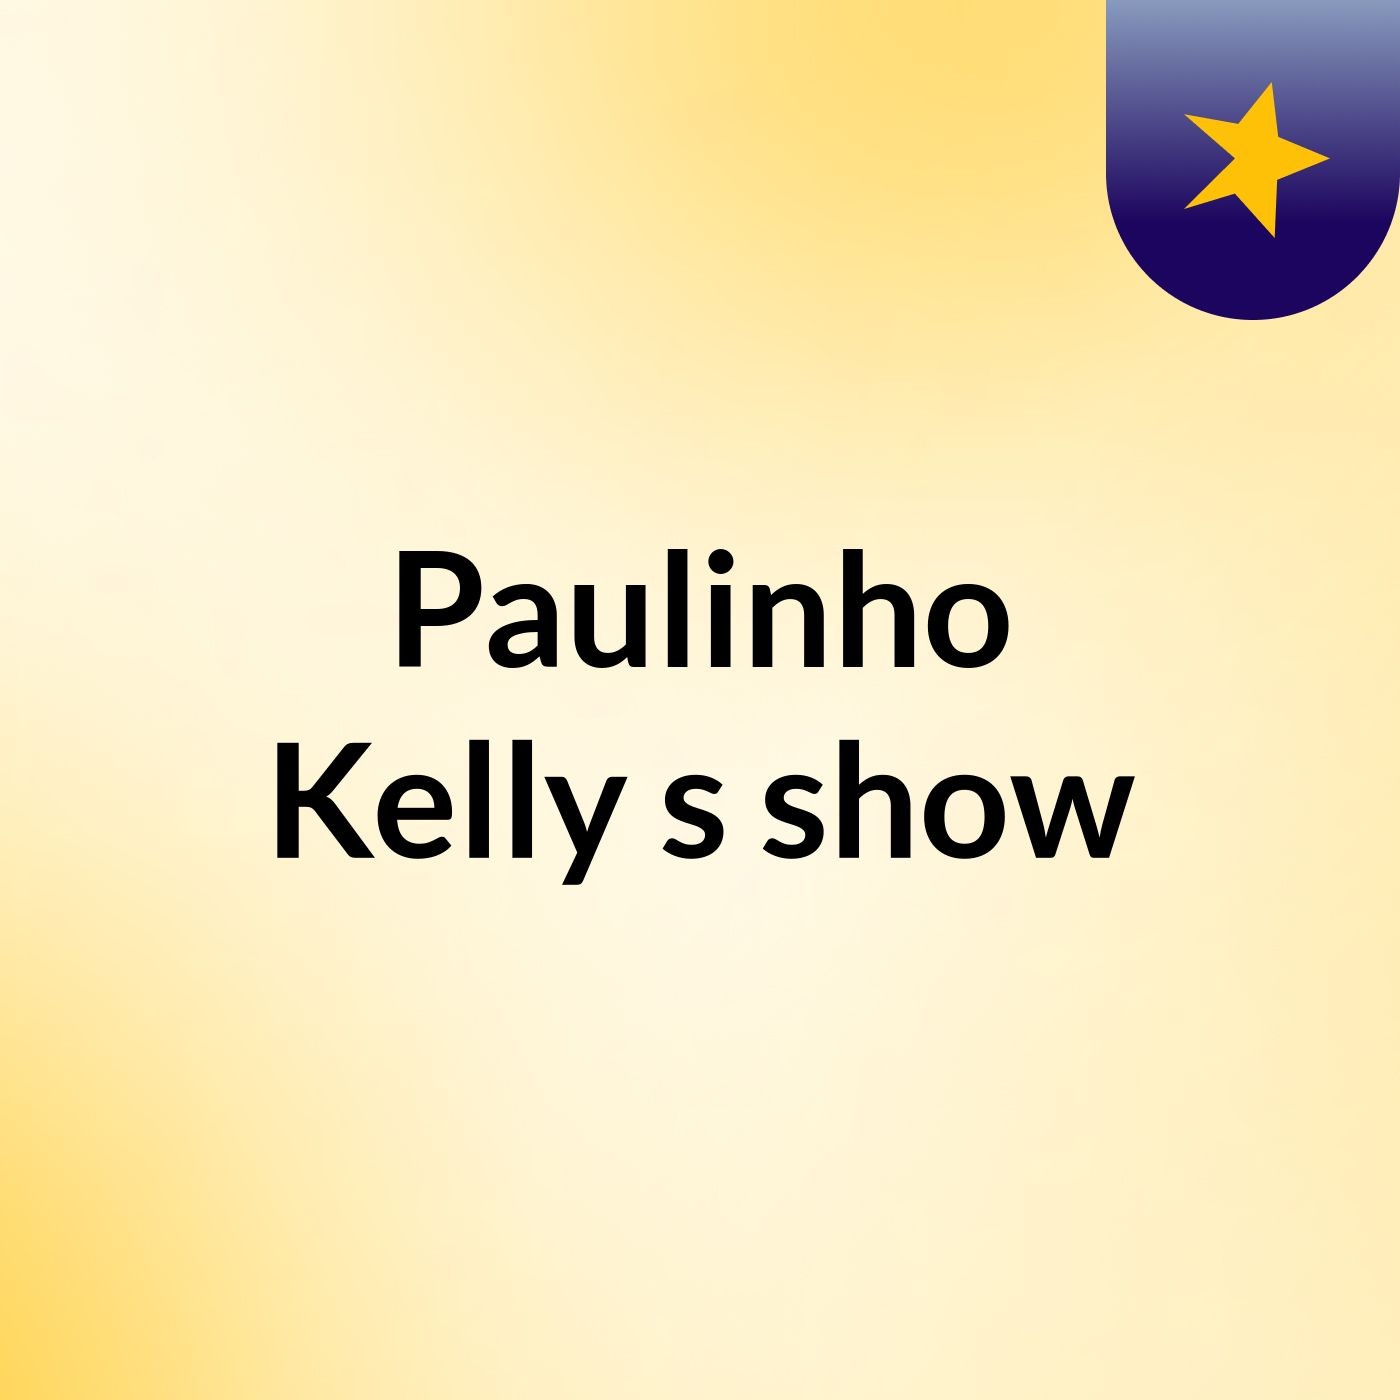 Paulinho Kelly's show